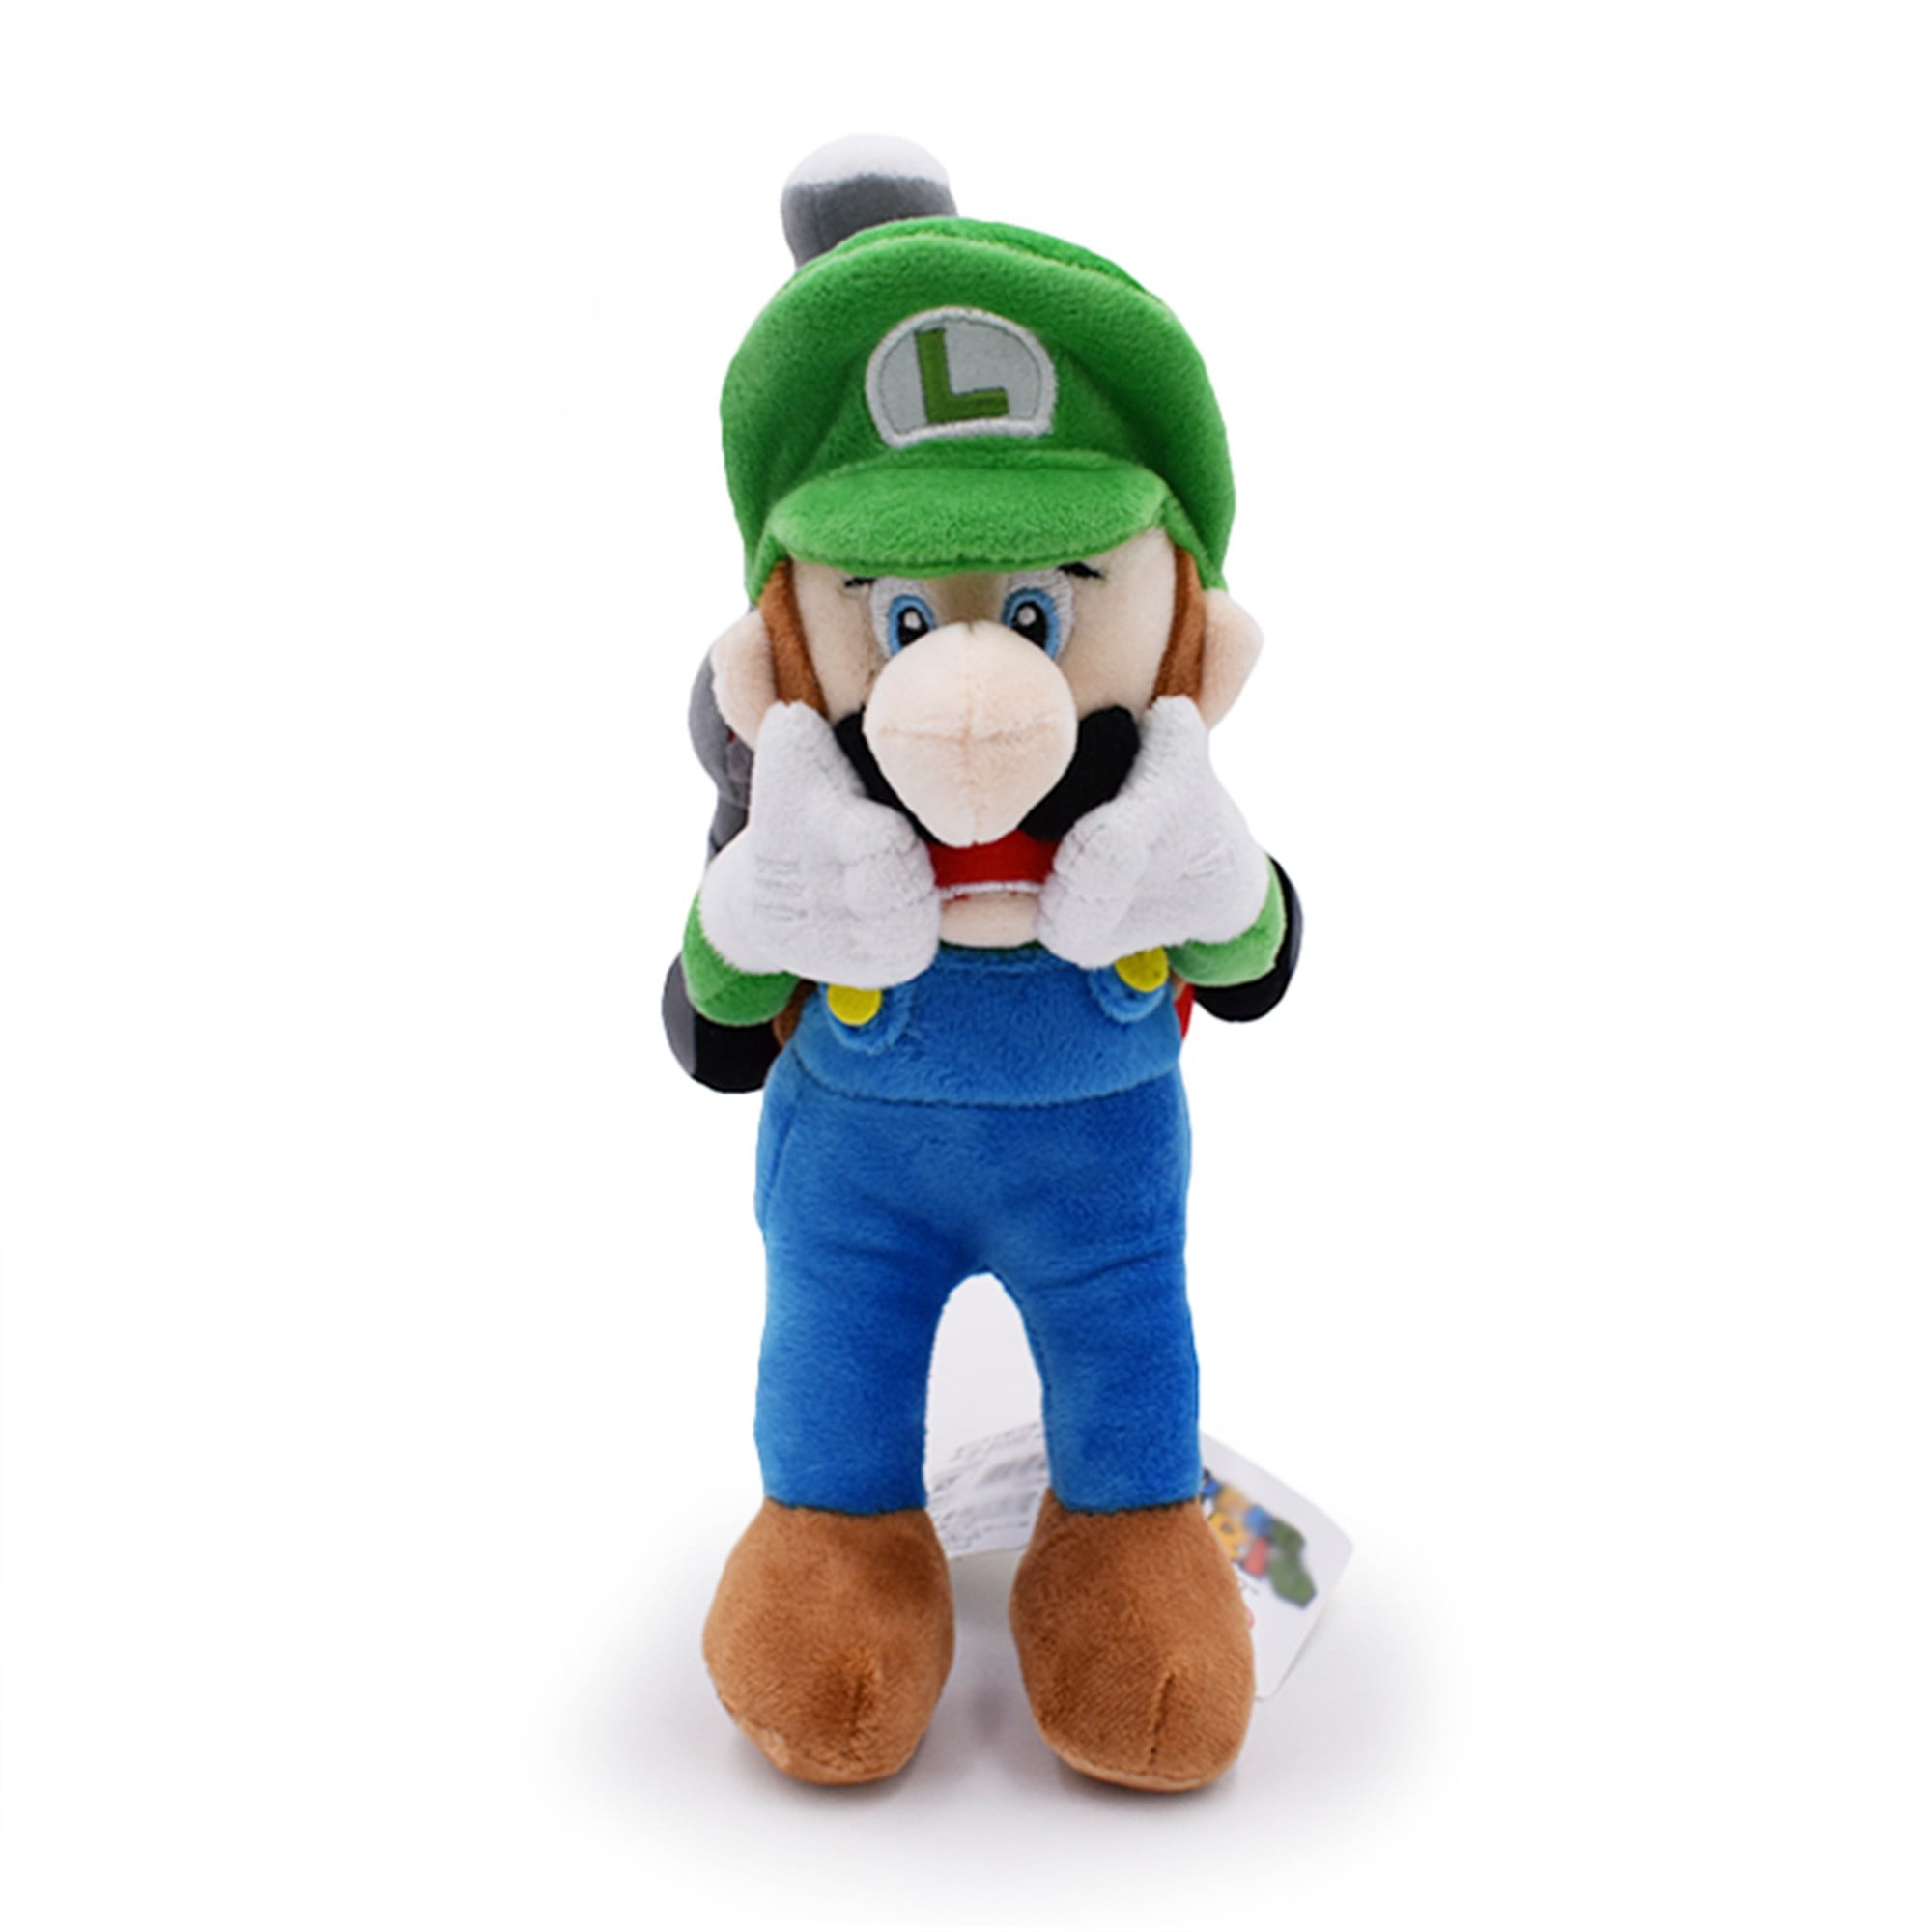 Super Mario Luigi's Mansion Luigi Plush Teddy Soft Toy Stuffed Animal Doll 7" 